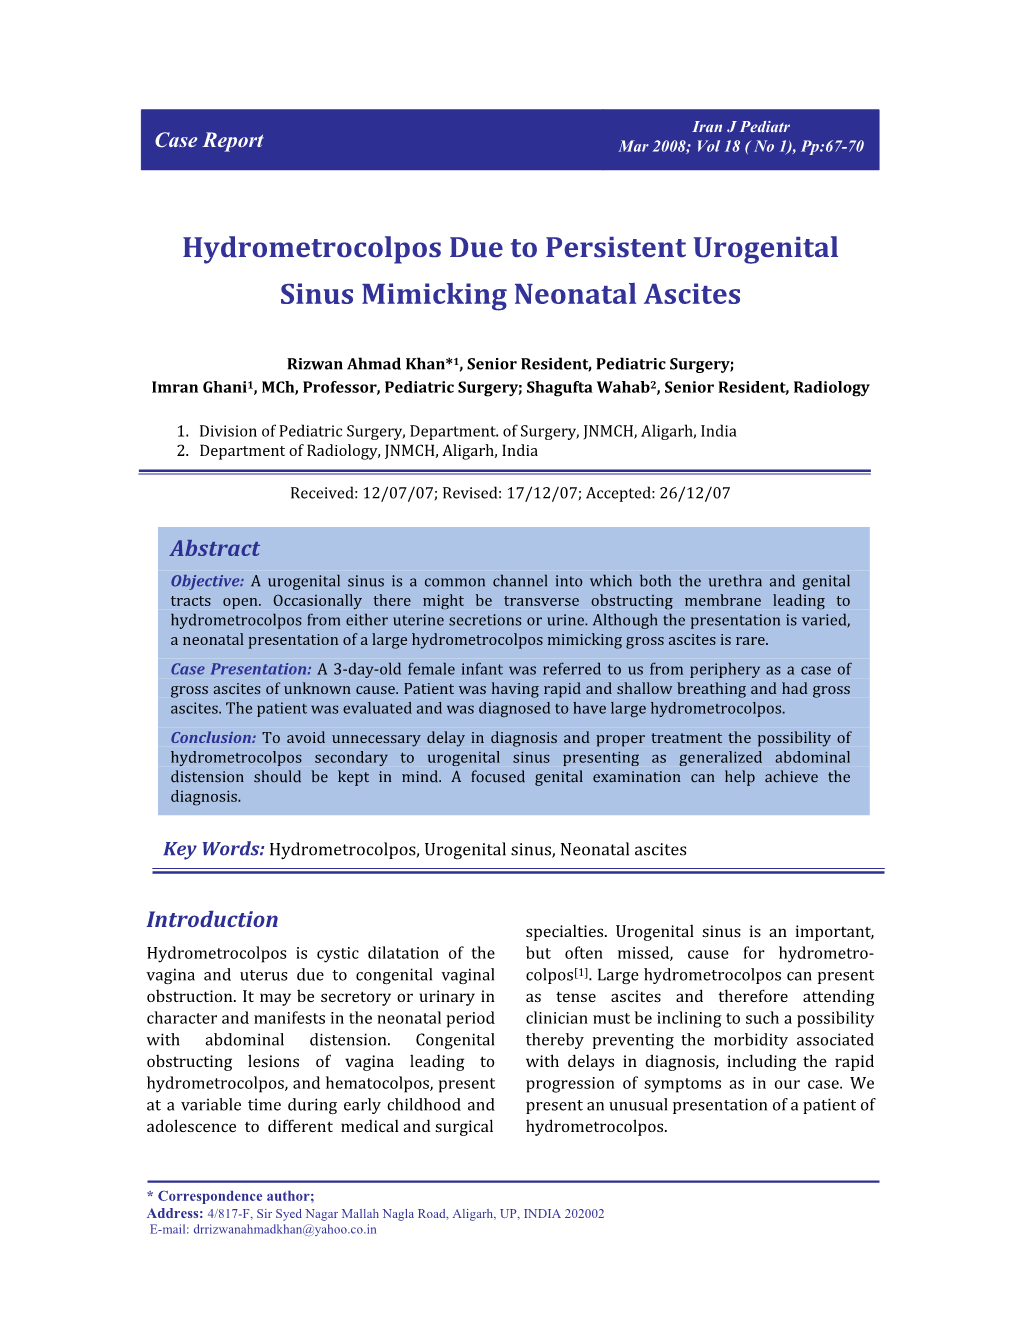 Hydrometrocolpos Due to Persistent Urogenital Sinus Mimicking Neonatal Ascites